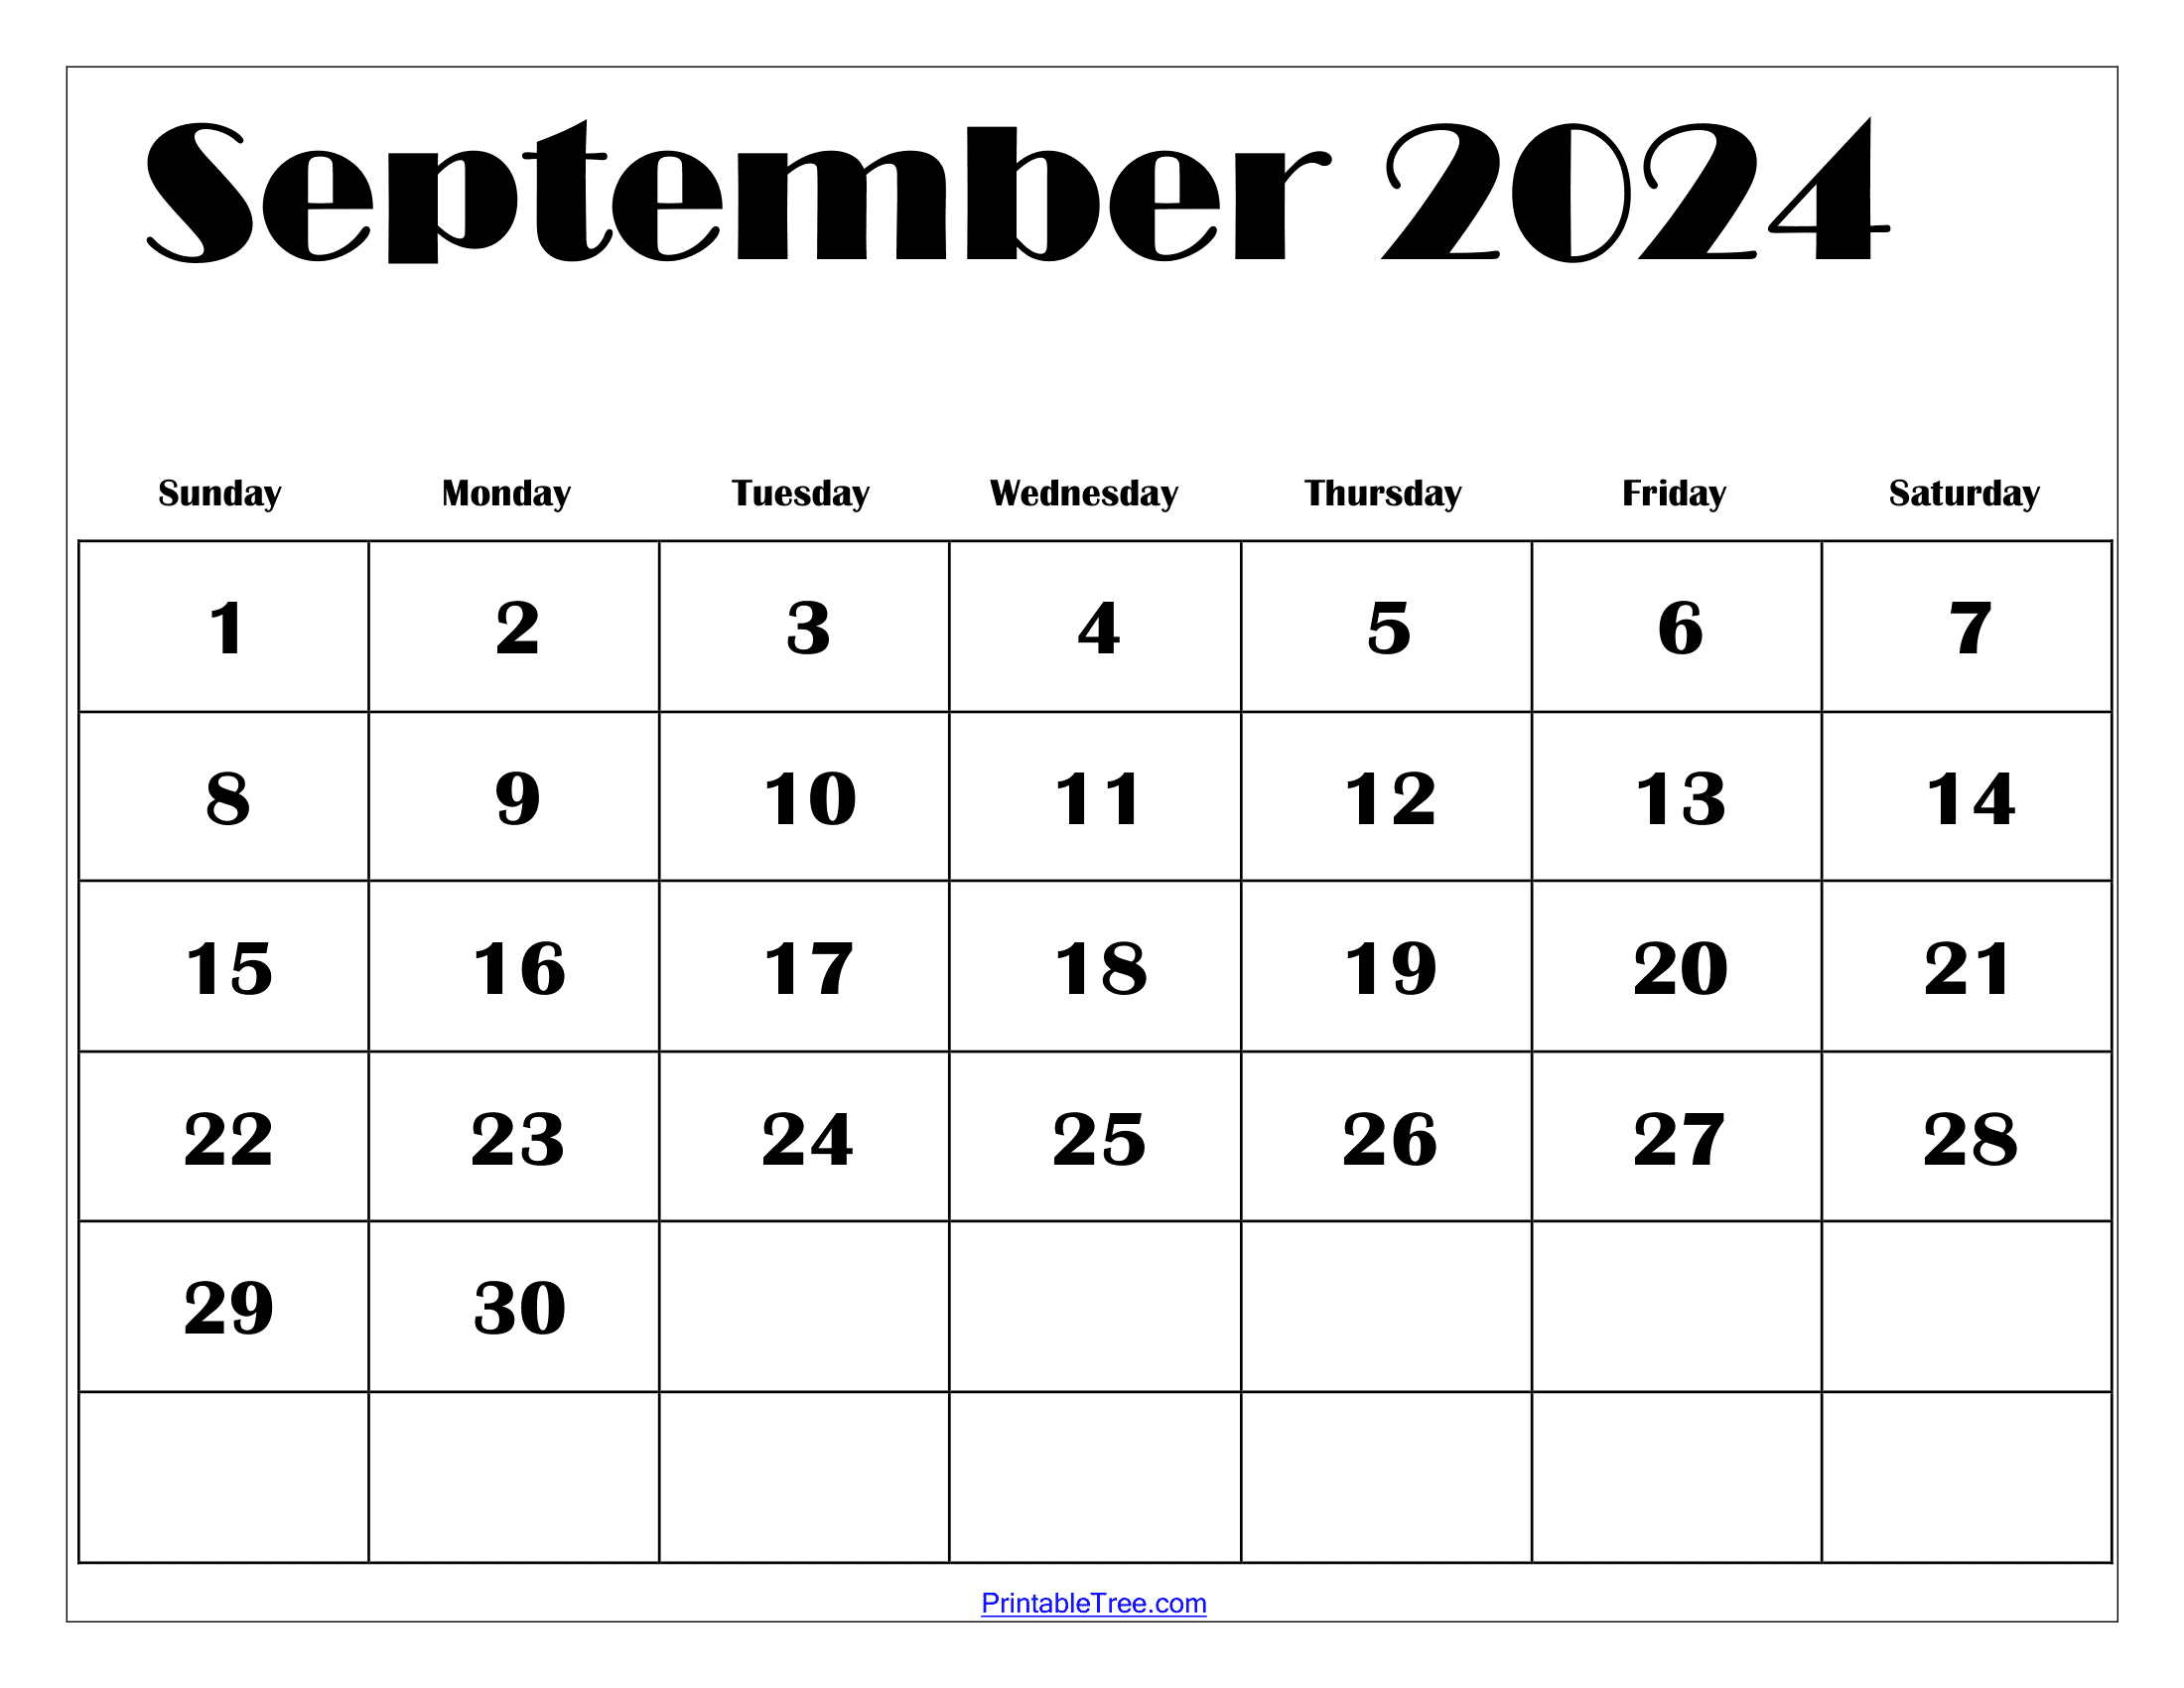 September 2024 Calendar Printable Pdf With Holidays | Printable Calendar 2024 September